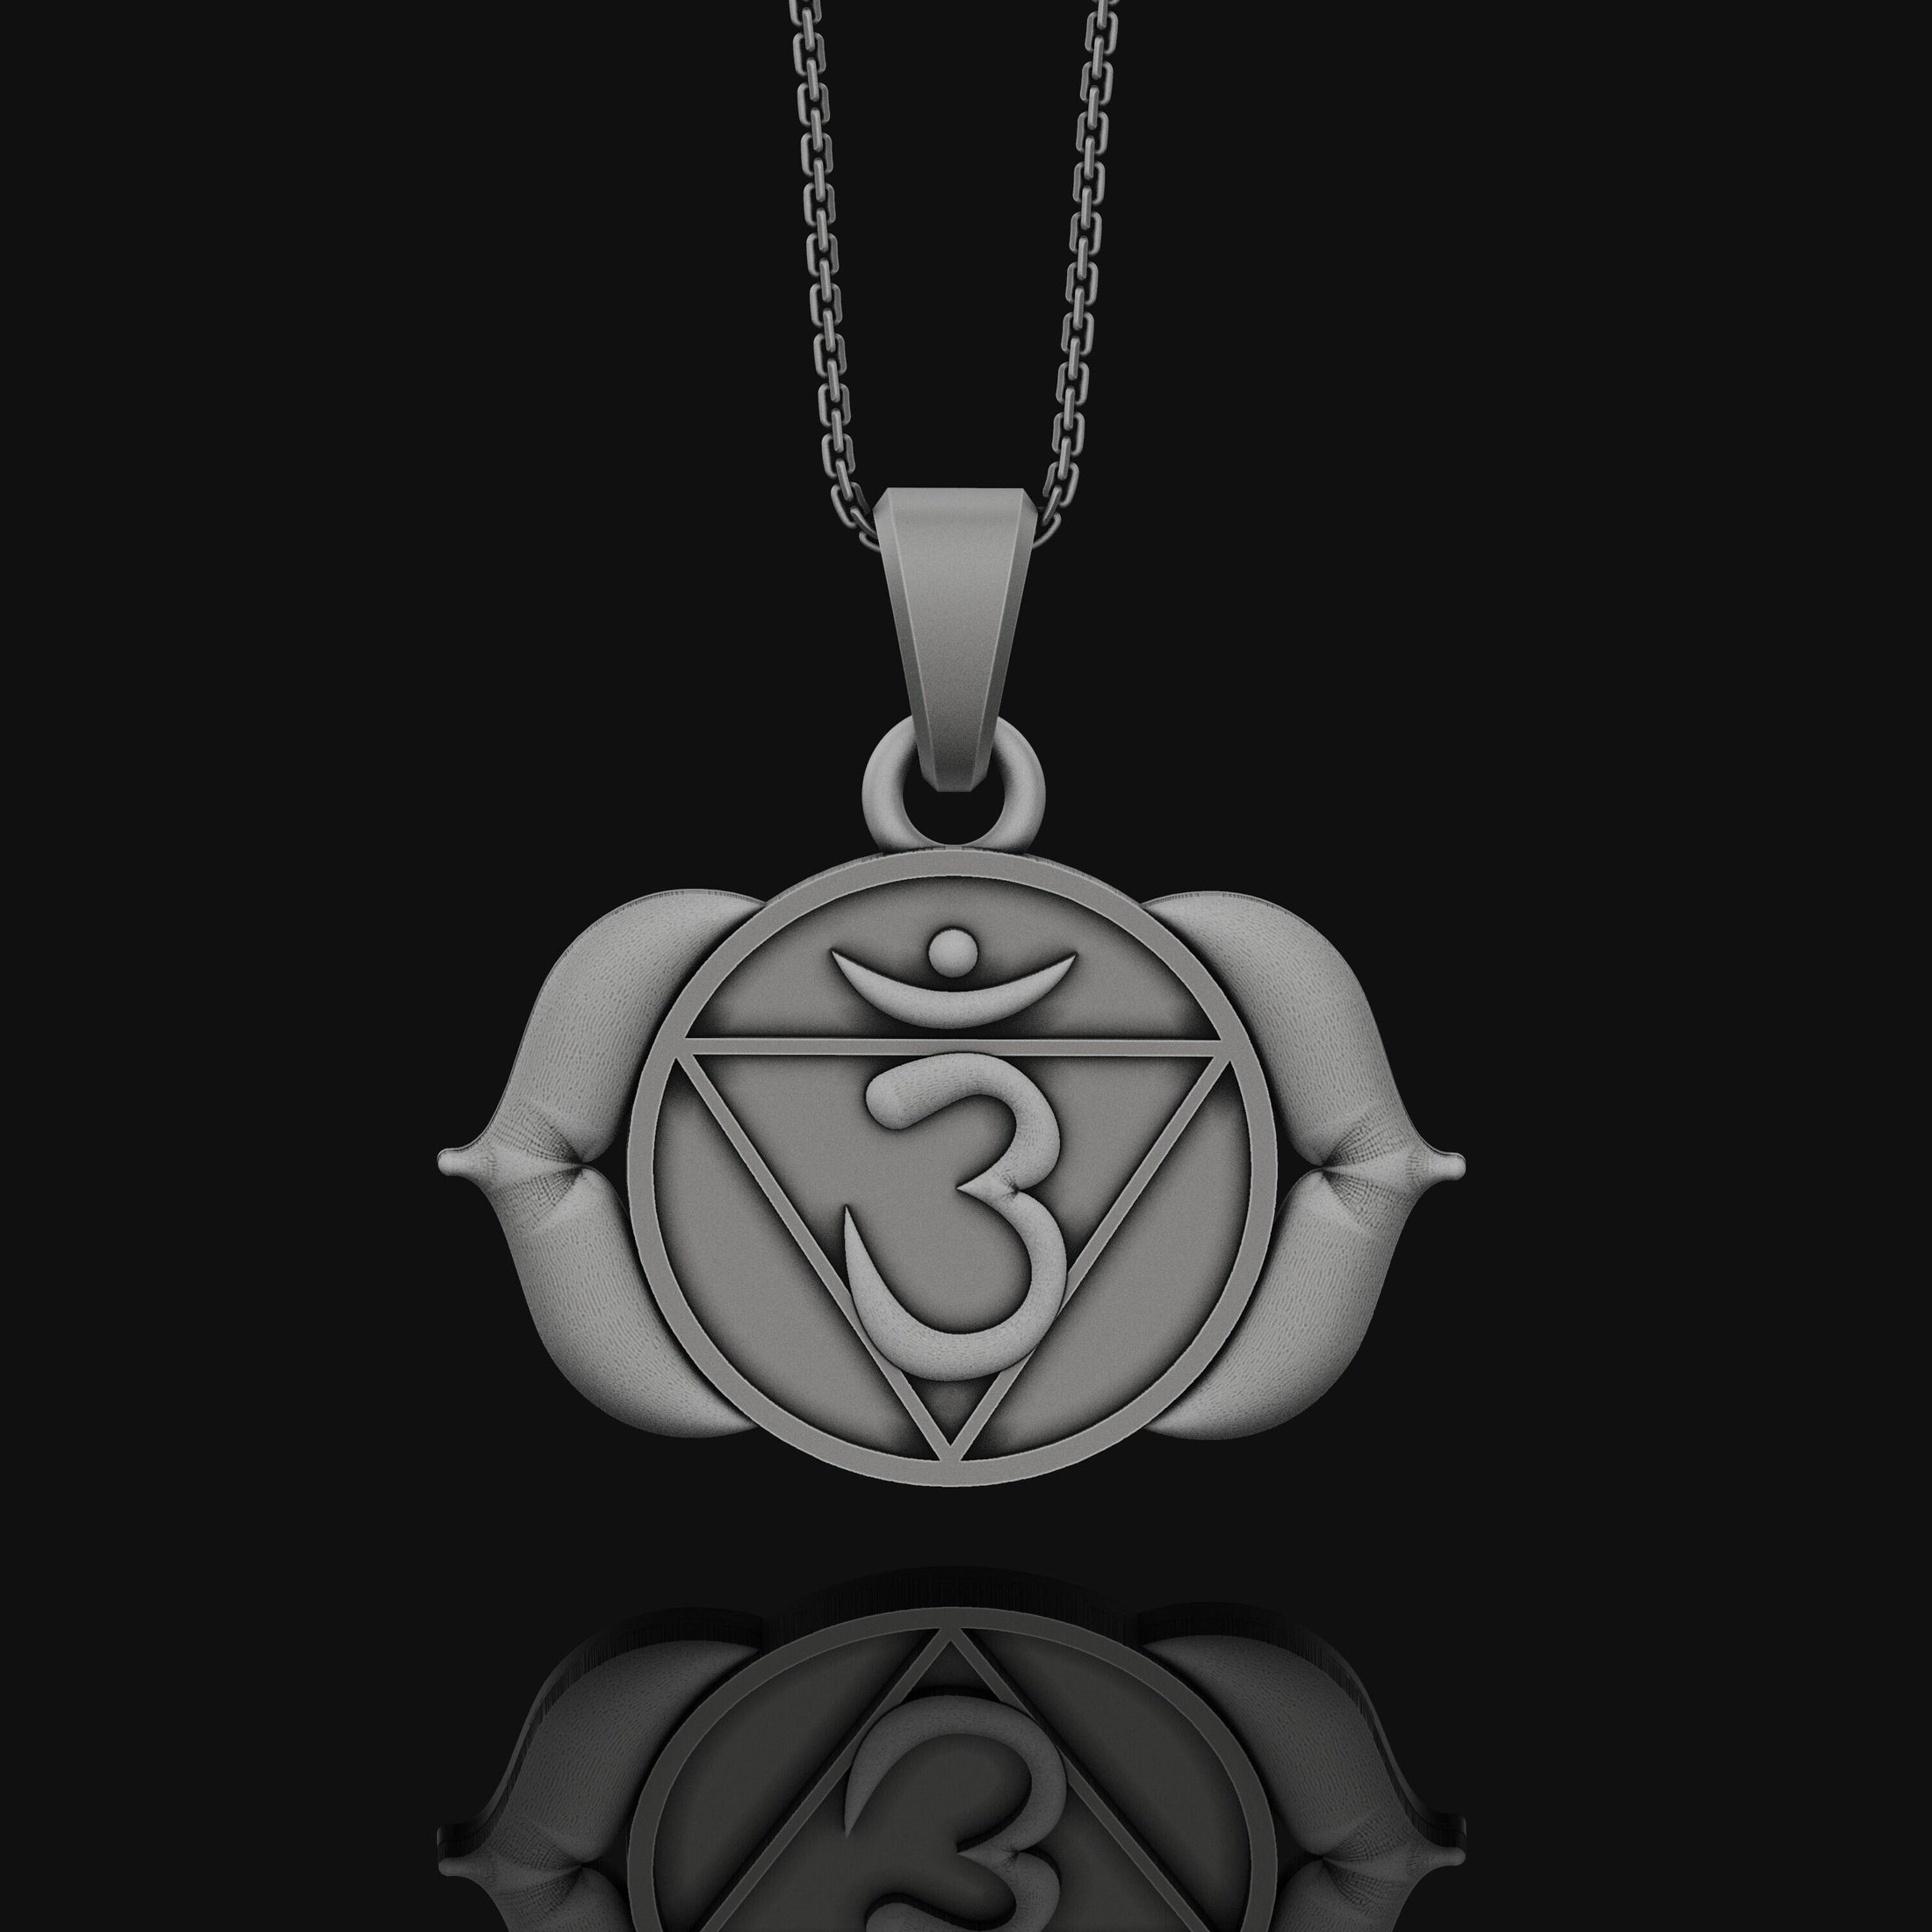 Third Eye Chakra Necklace, Chakras, Meditation, Reiki, Spiritual Gift, Metaphysical, Gift For Her, Handmade Jewelry Oxidized Finish